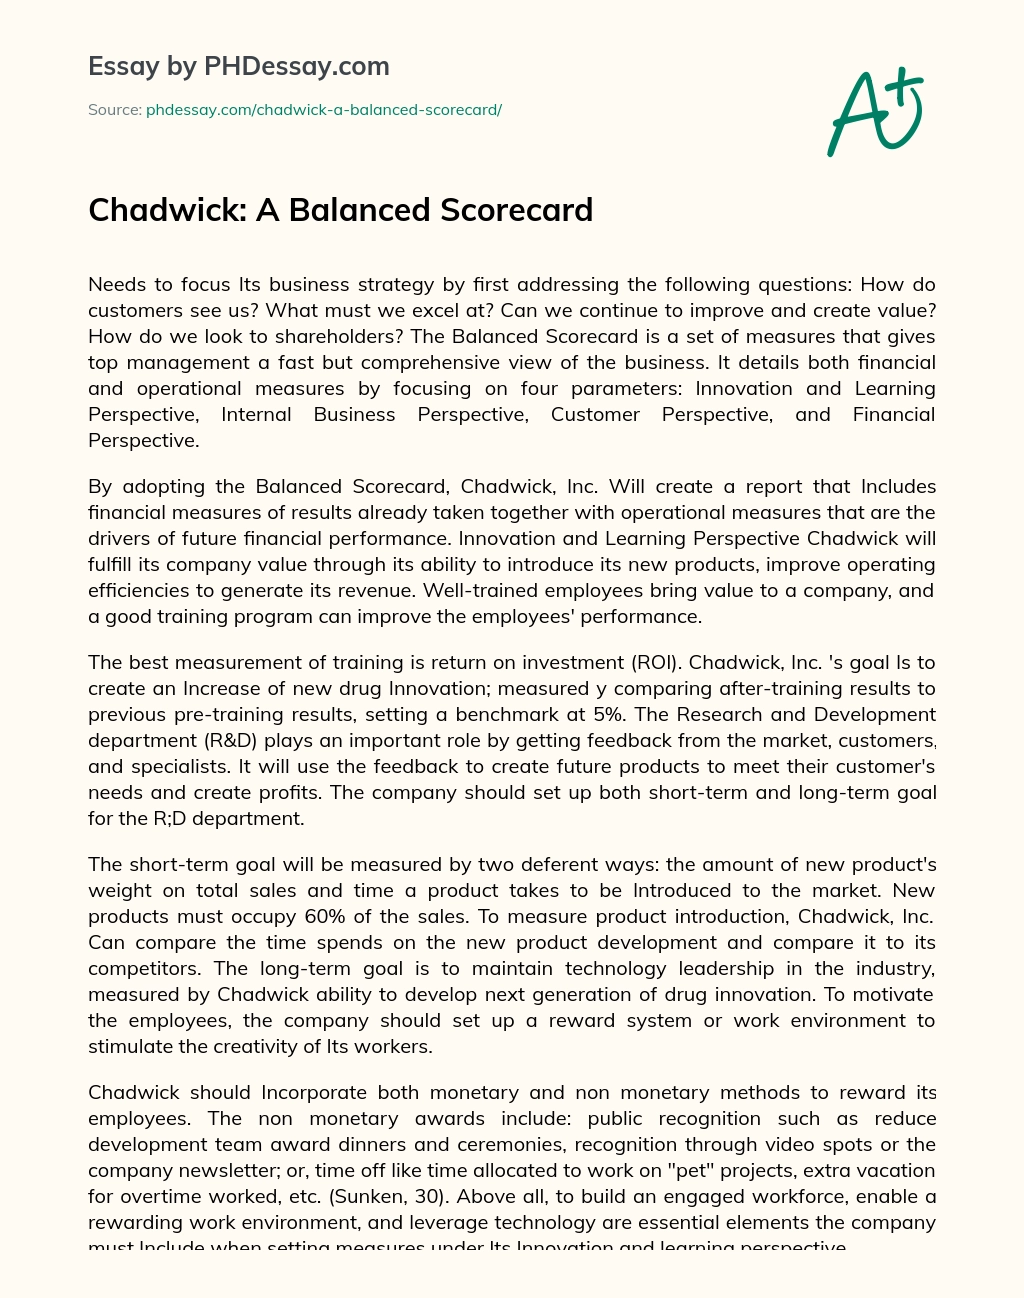 Chadwick: A Balanced Scorecard essay